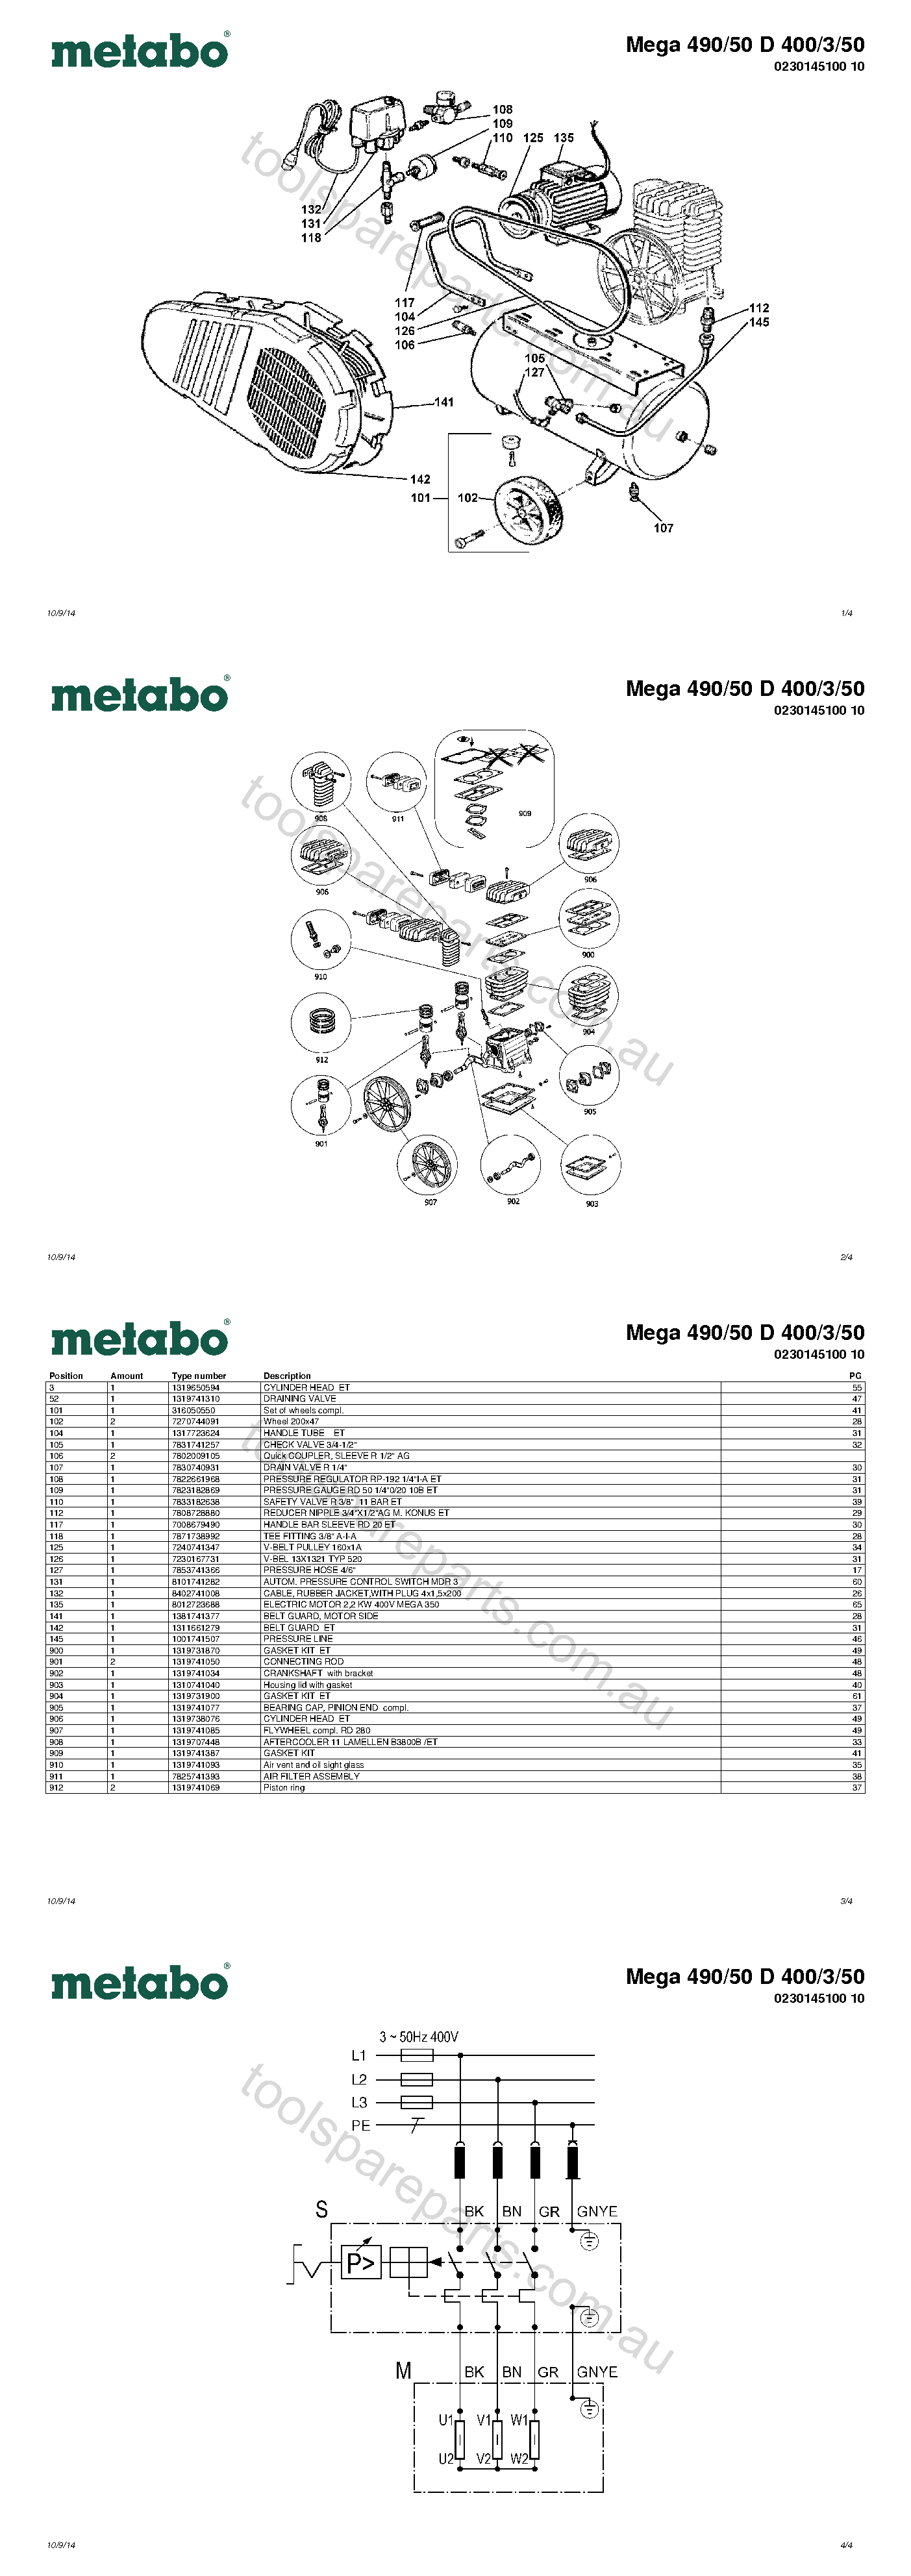 Metabo Mega 490/50 D 400/3/50 0230145100 10  Diagram 1